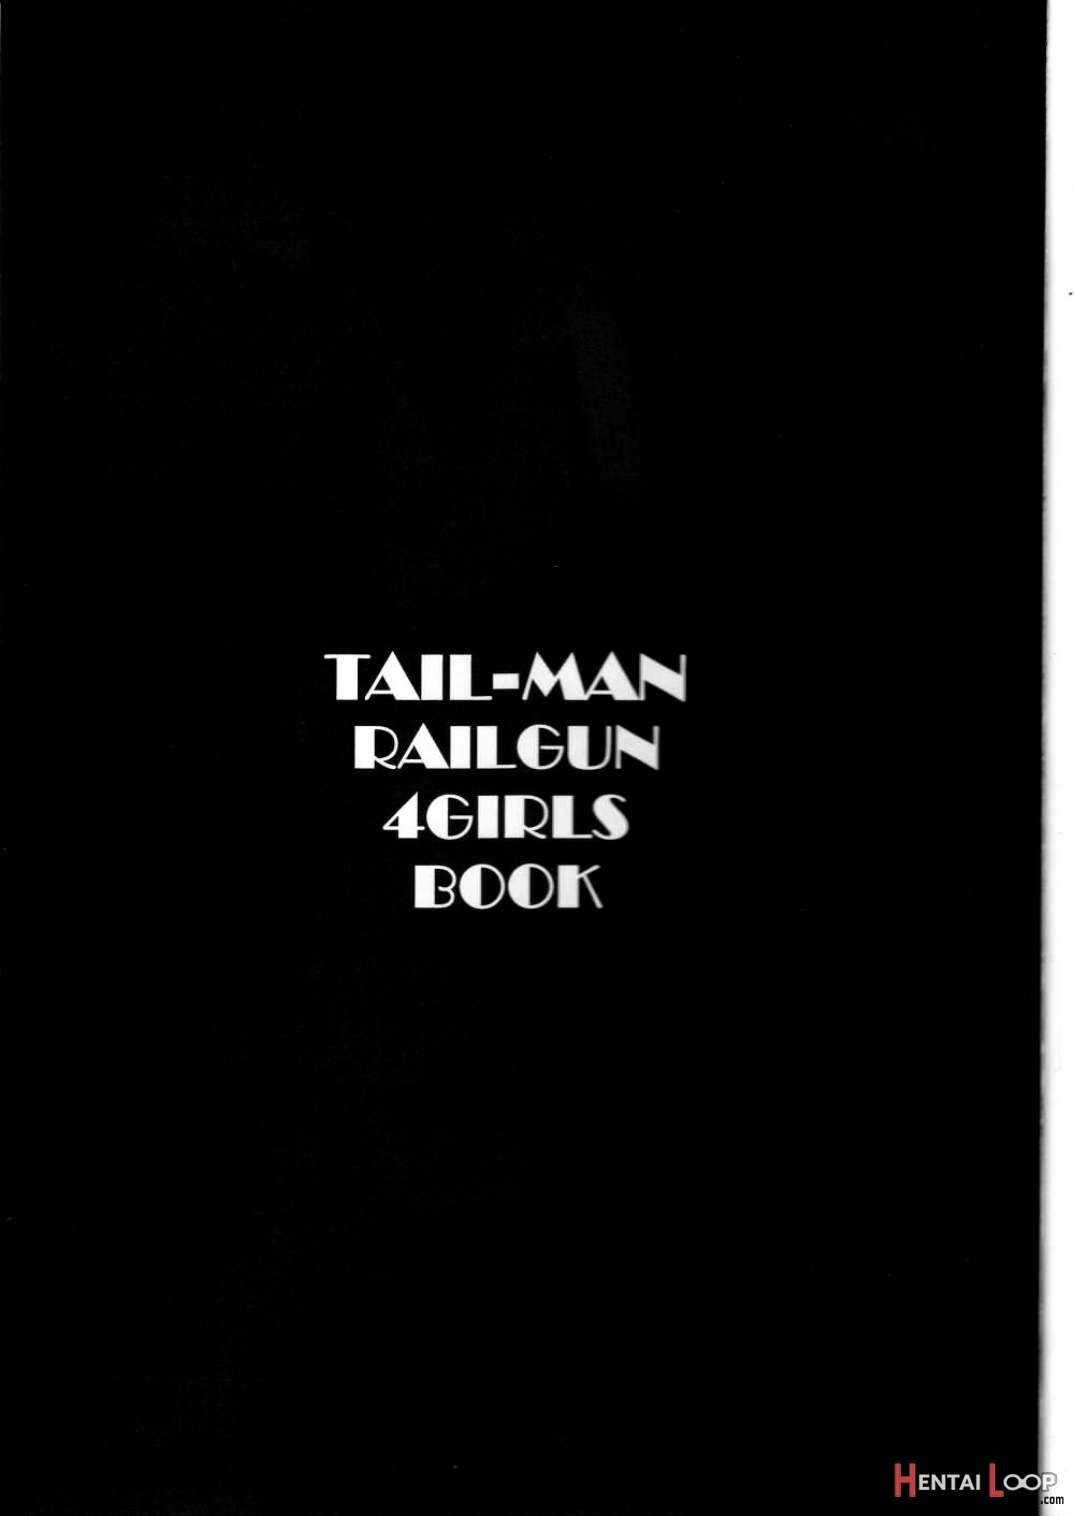 Tail-man Railgun 4girls Book page 2